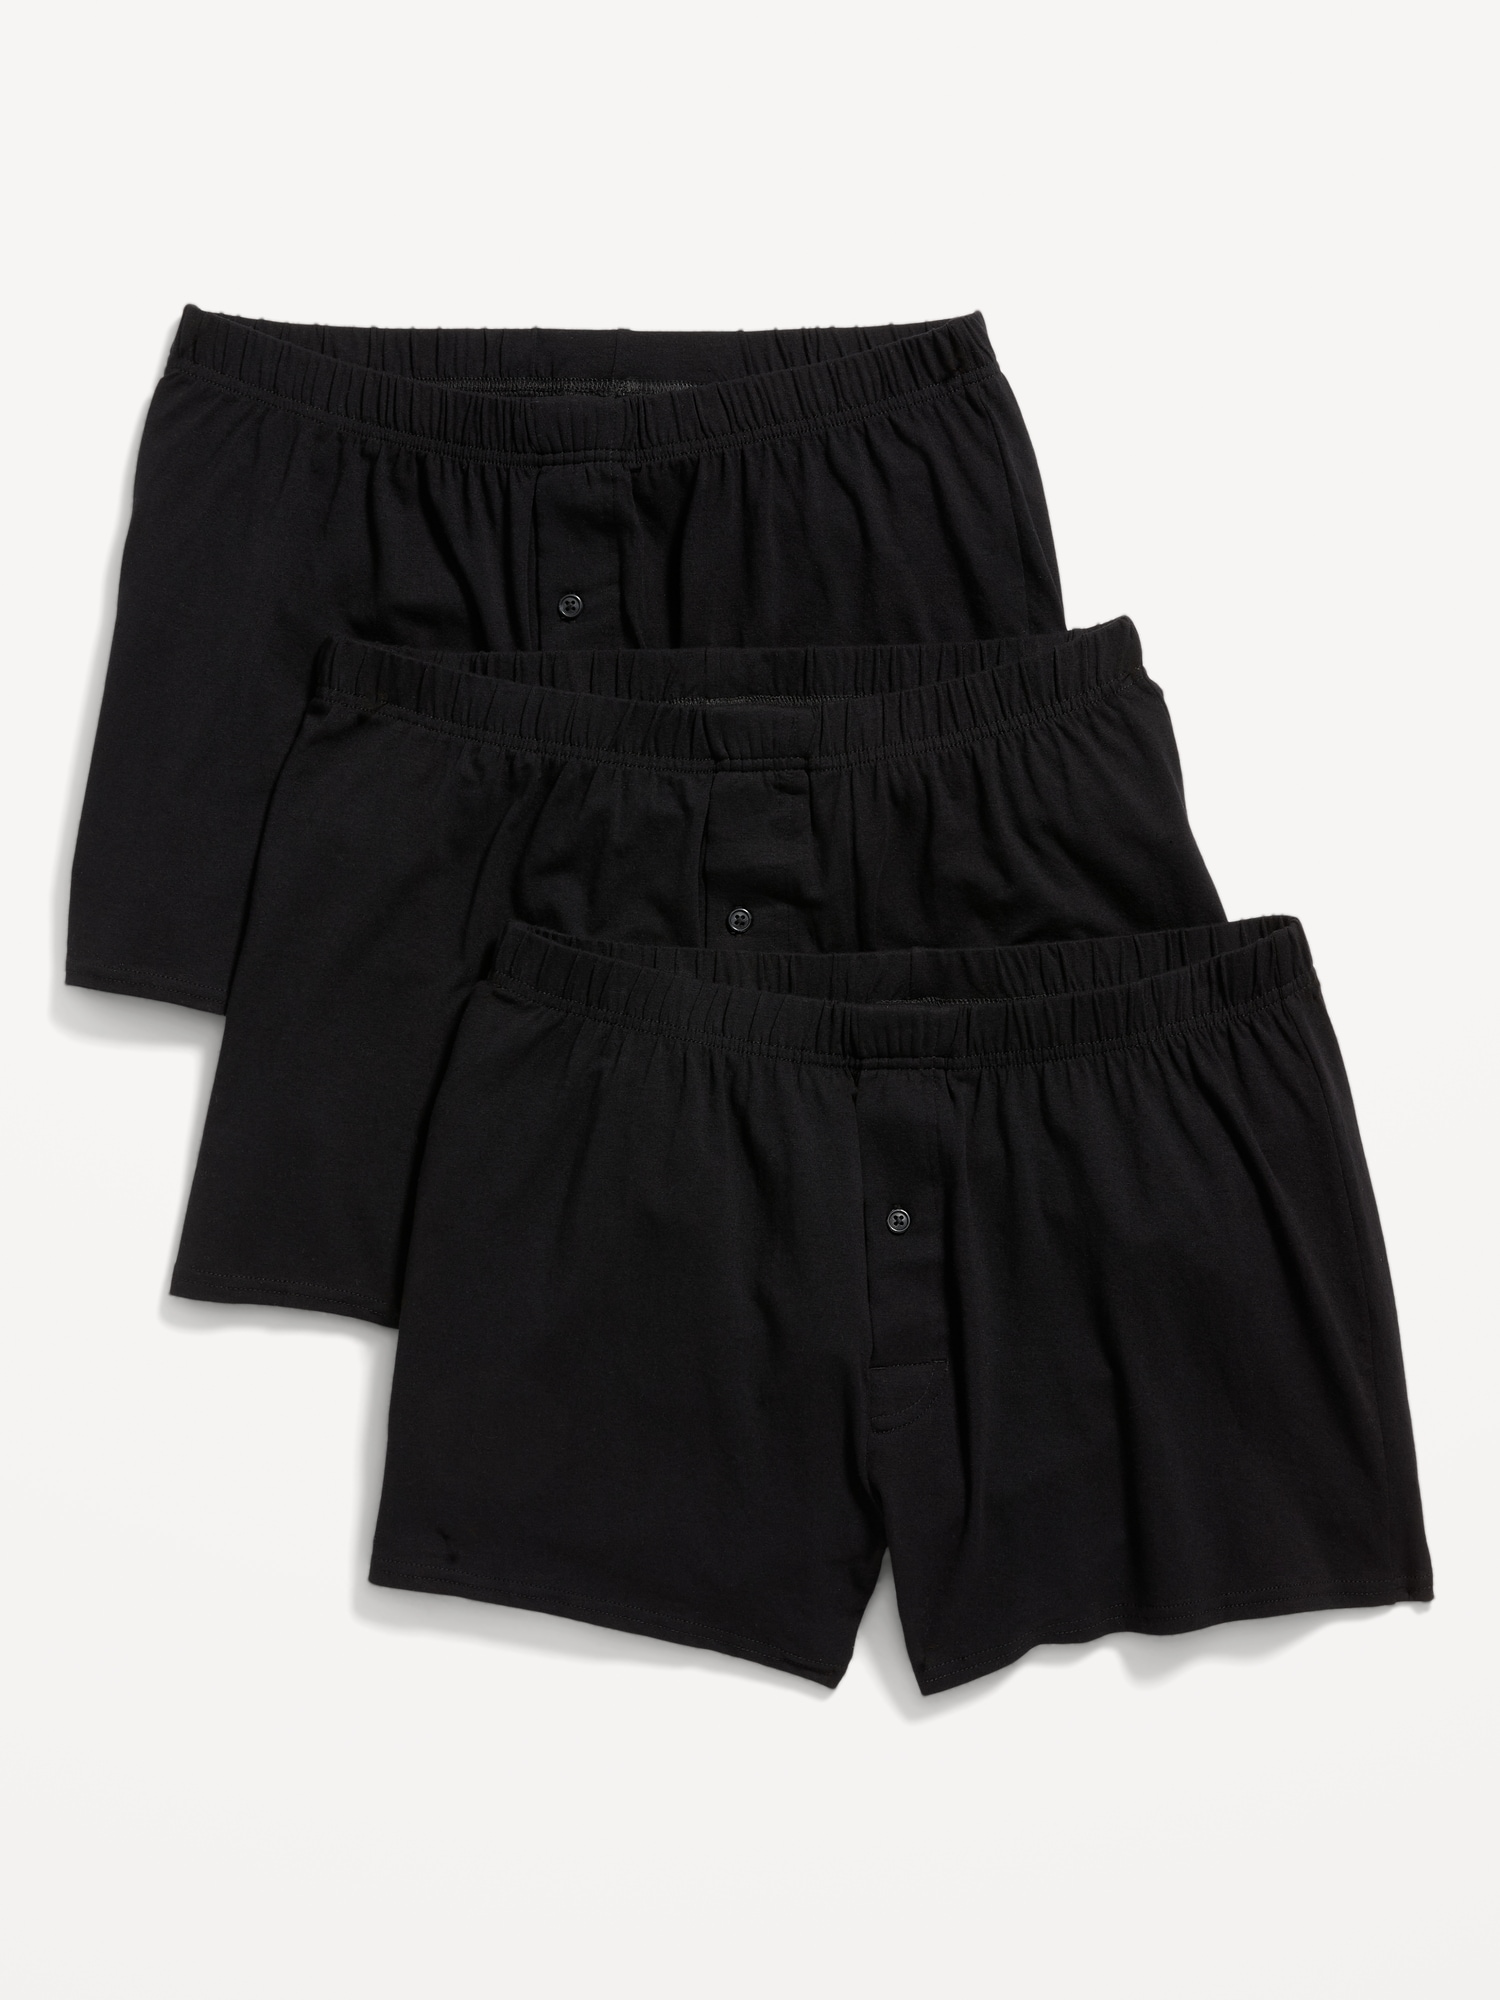 Old Navy Solid Jersey-Knit Boxer-Brief Underwear 3-Pack for Men--6.25-inch inseam black. 1